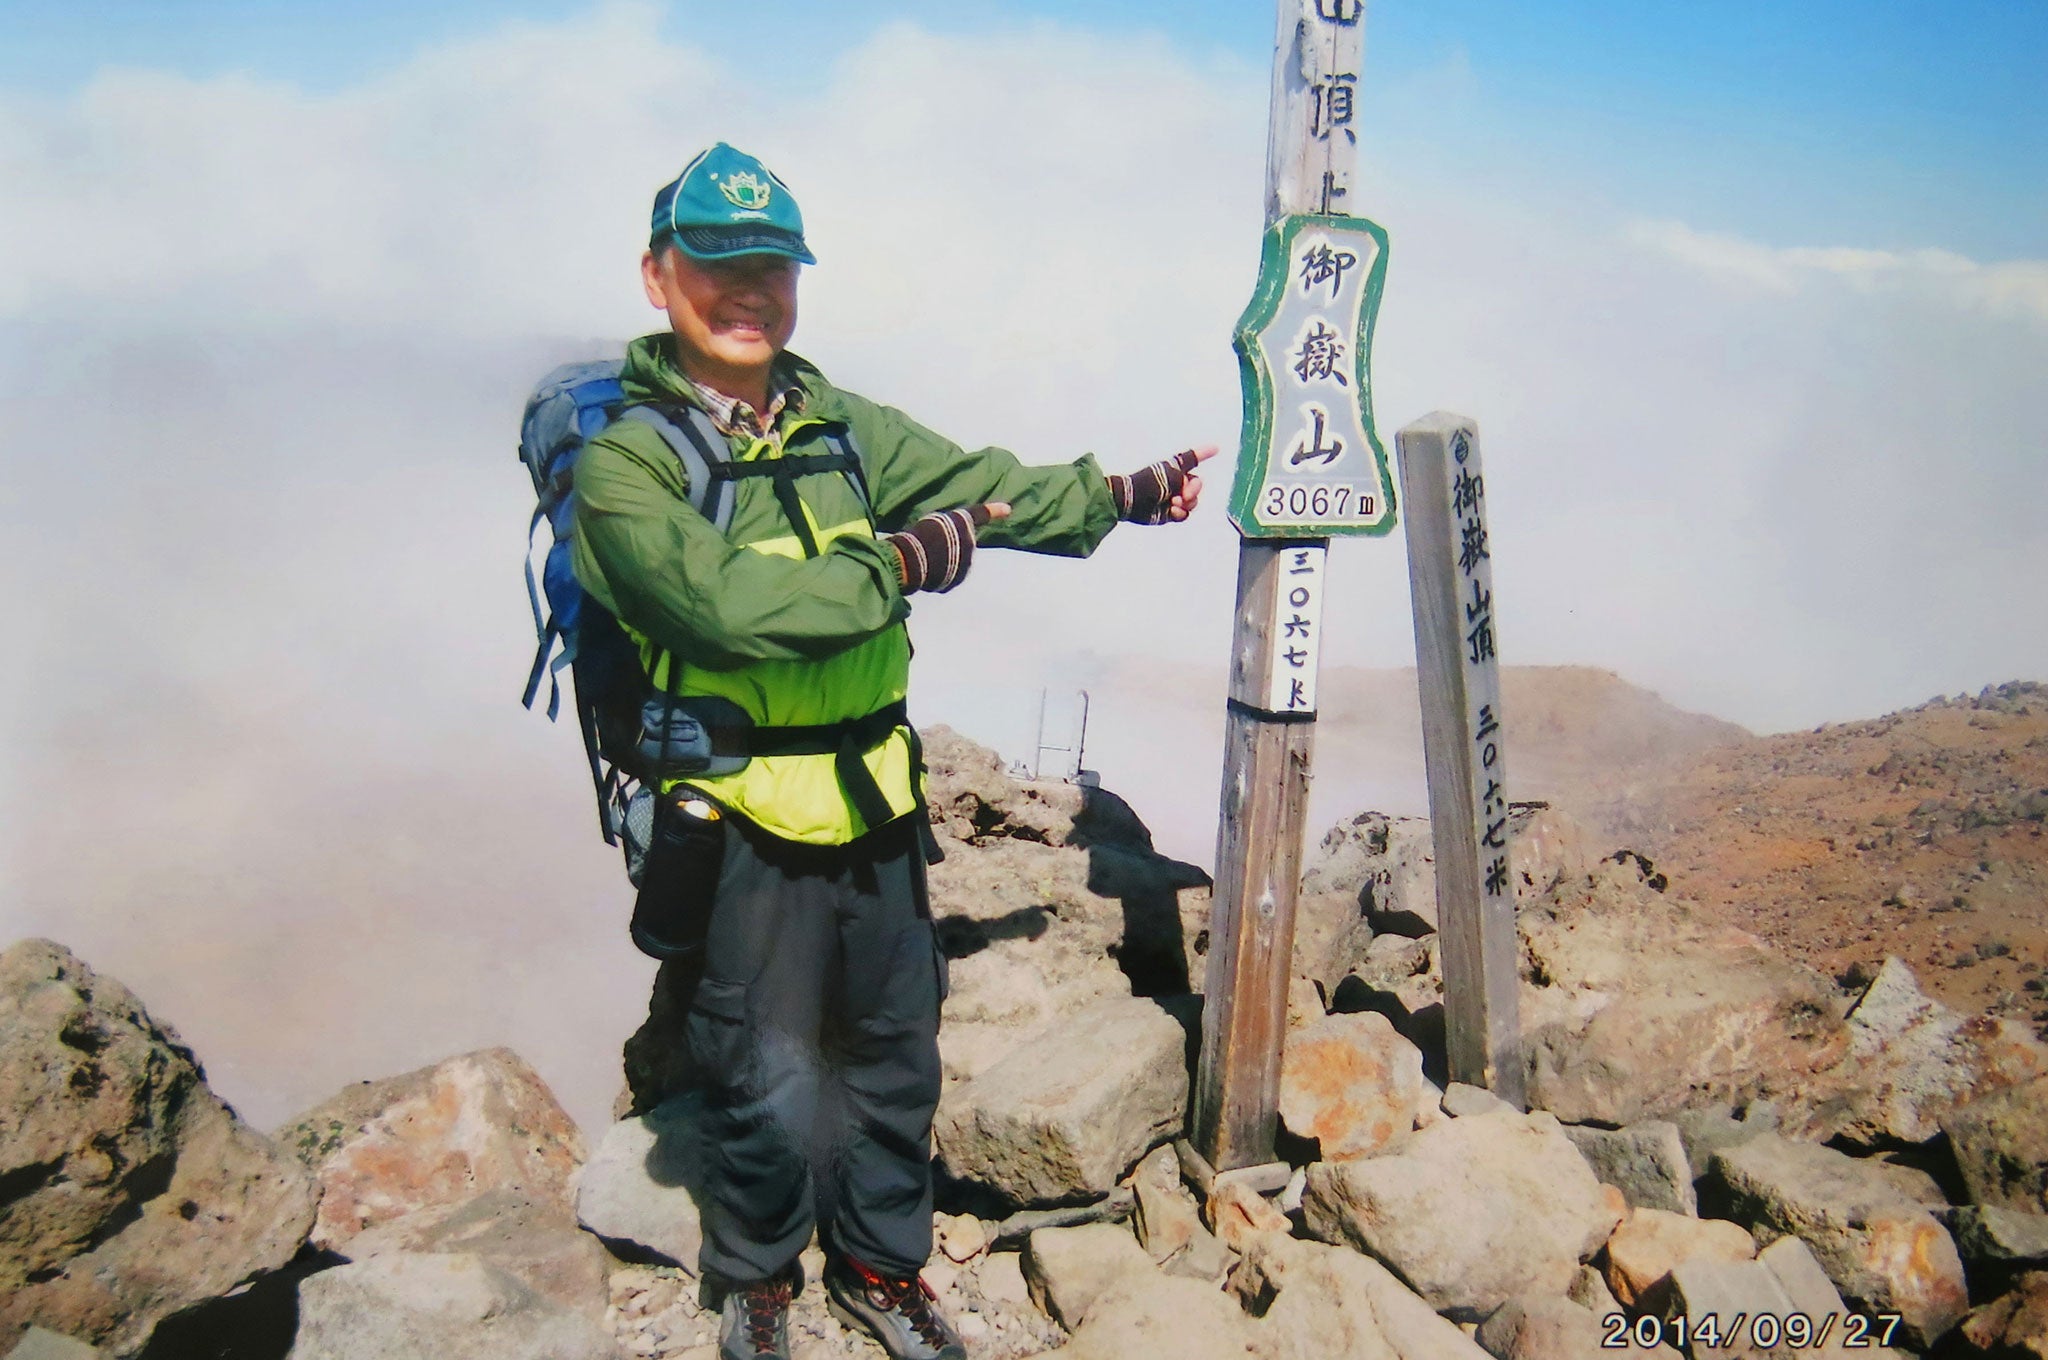 Izumi Noguchi poses on the summit of Mount Ontake shortly before the eruption